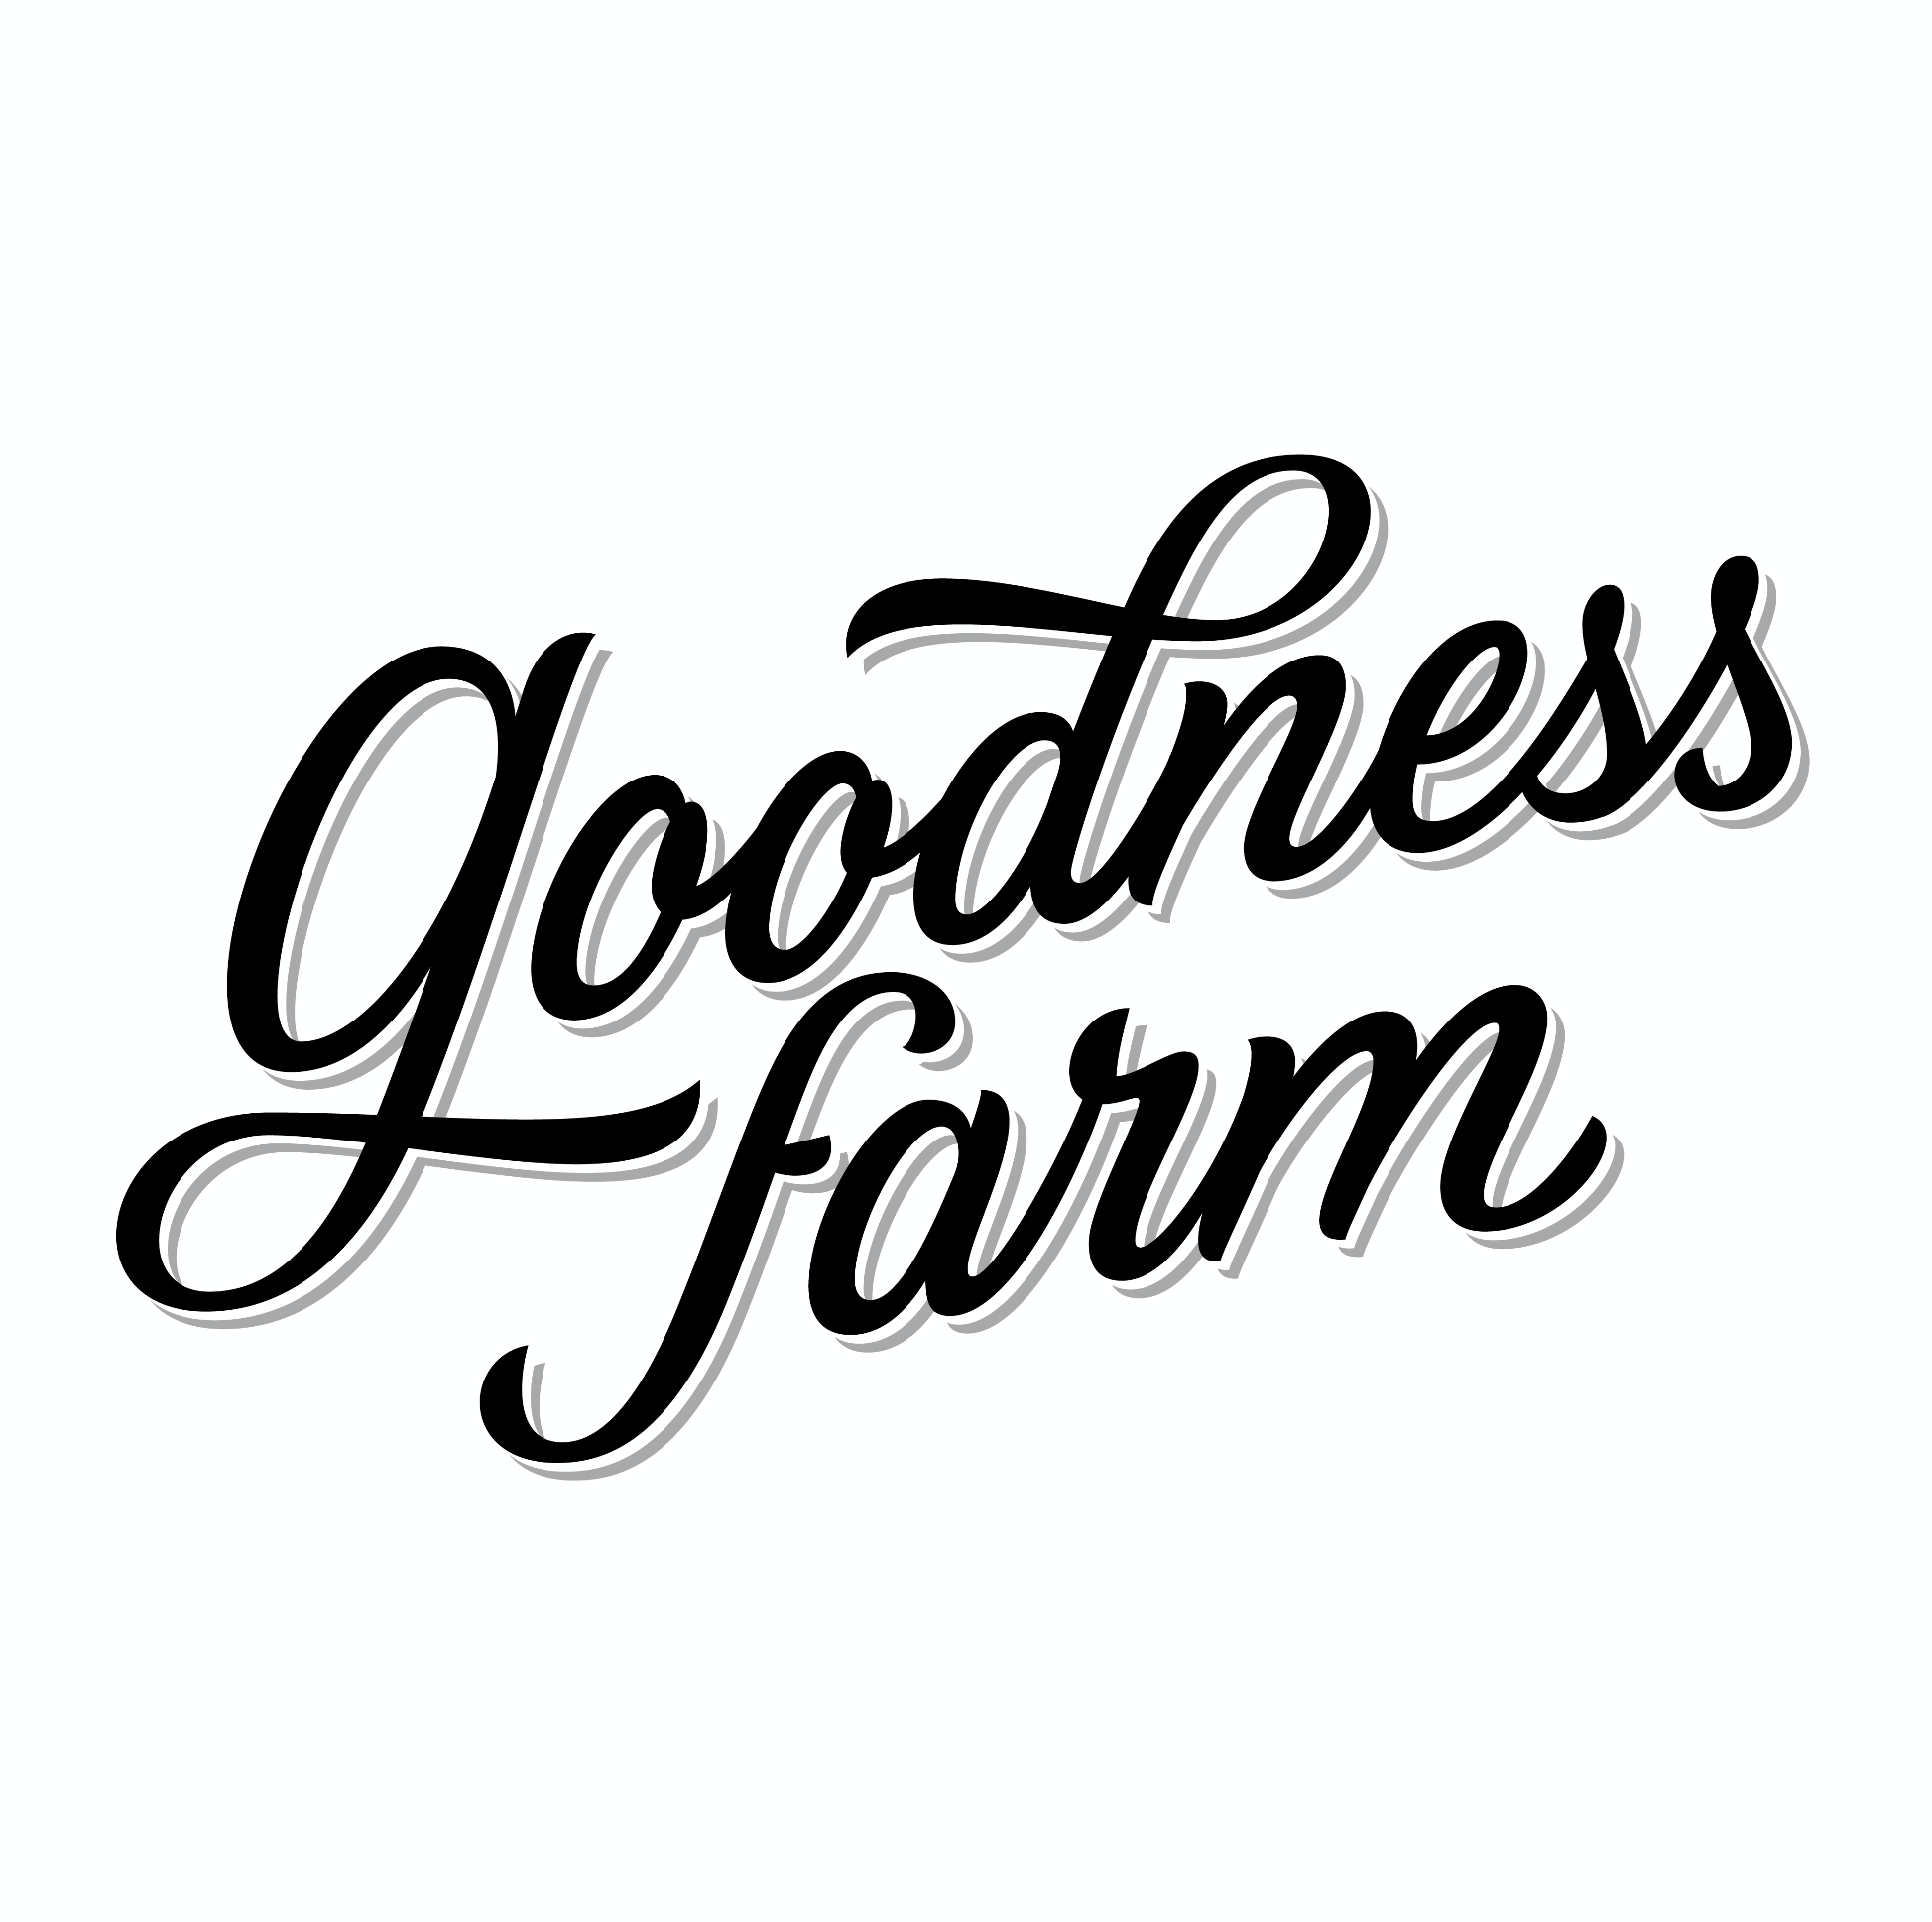 Goodness farm